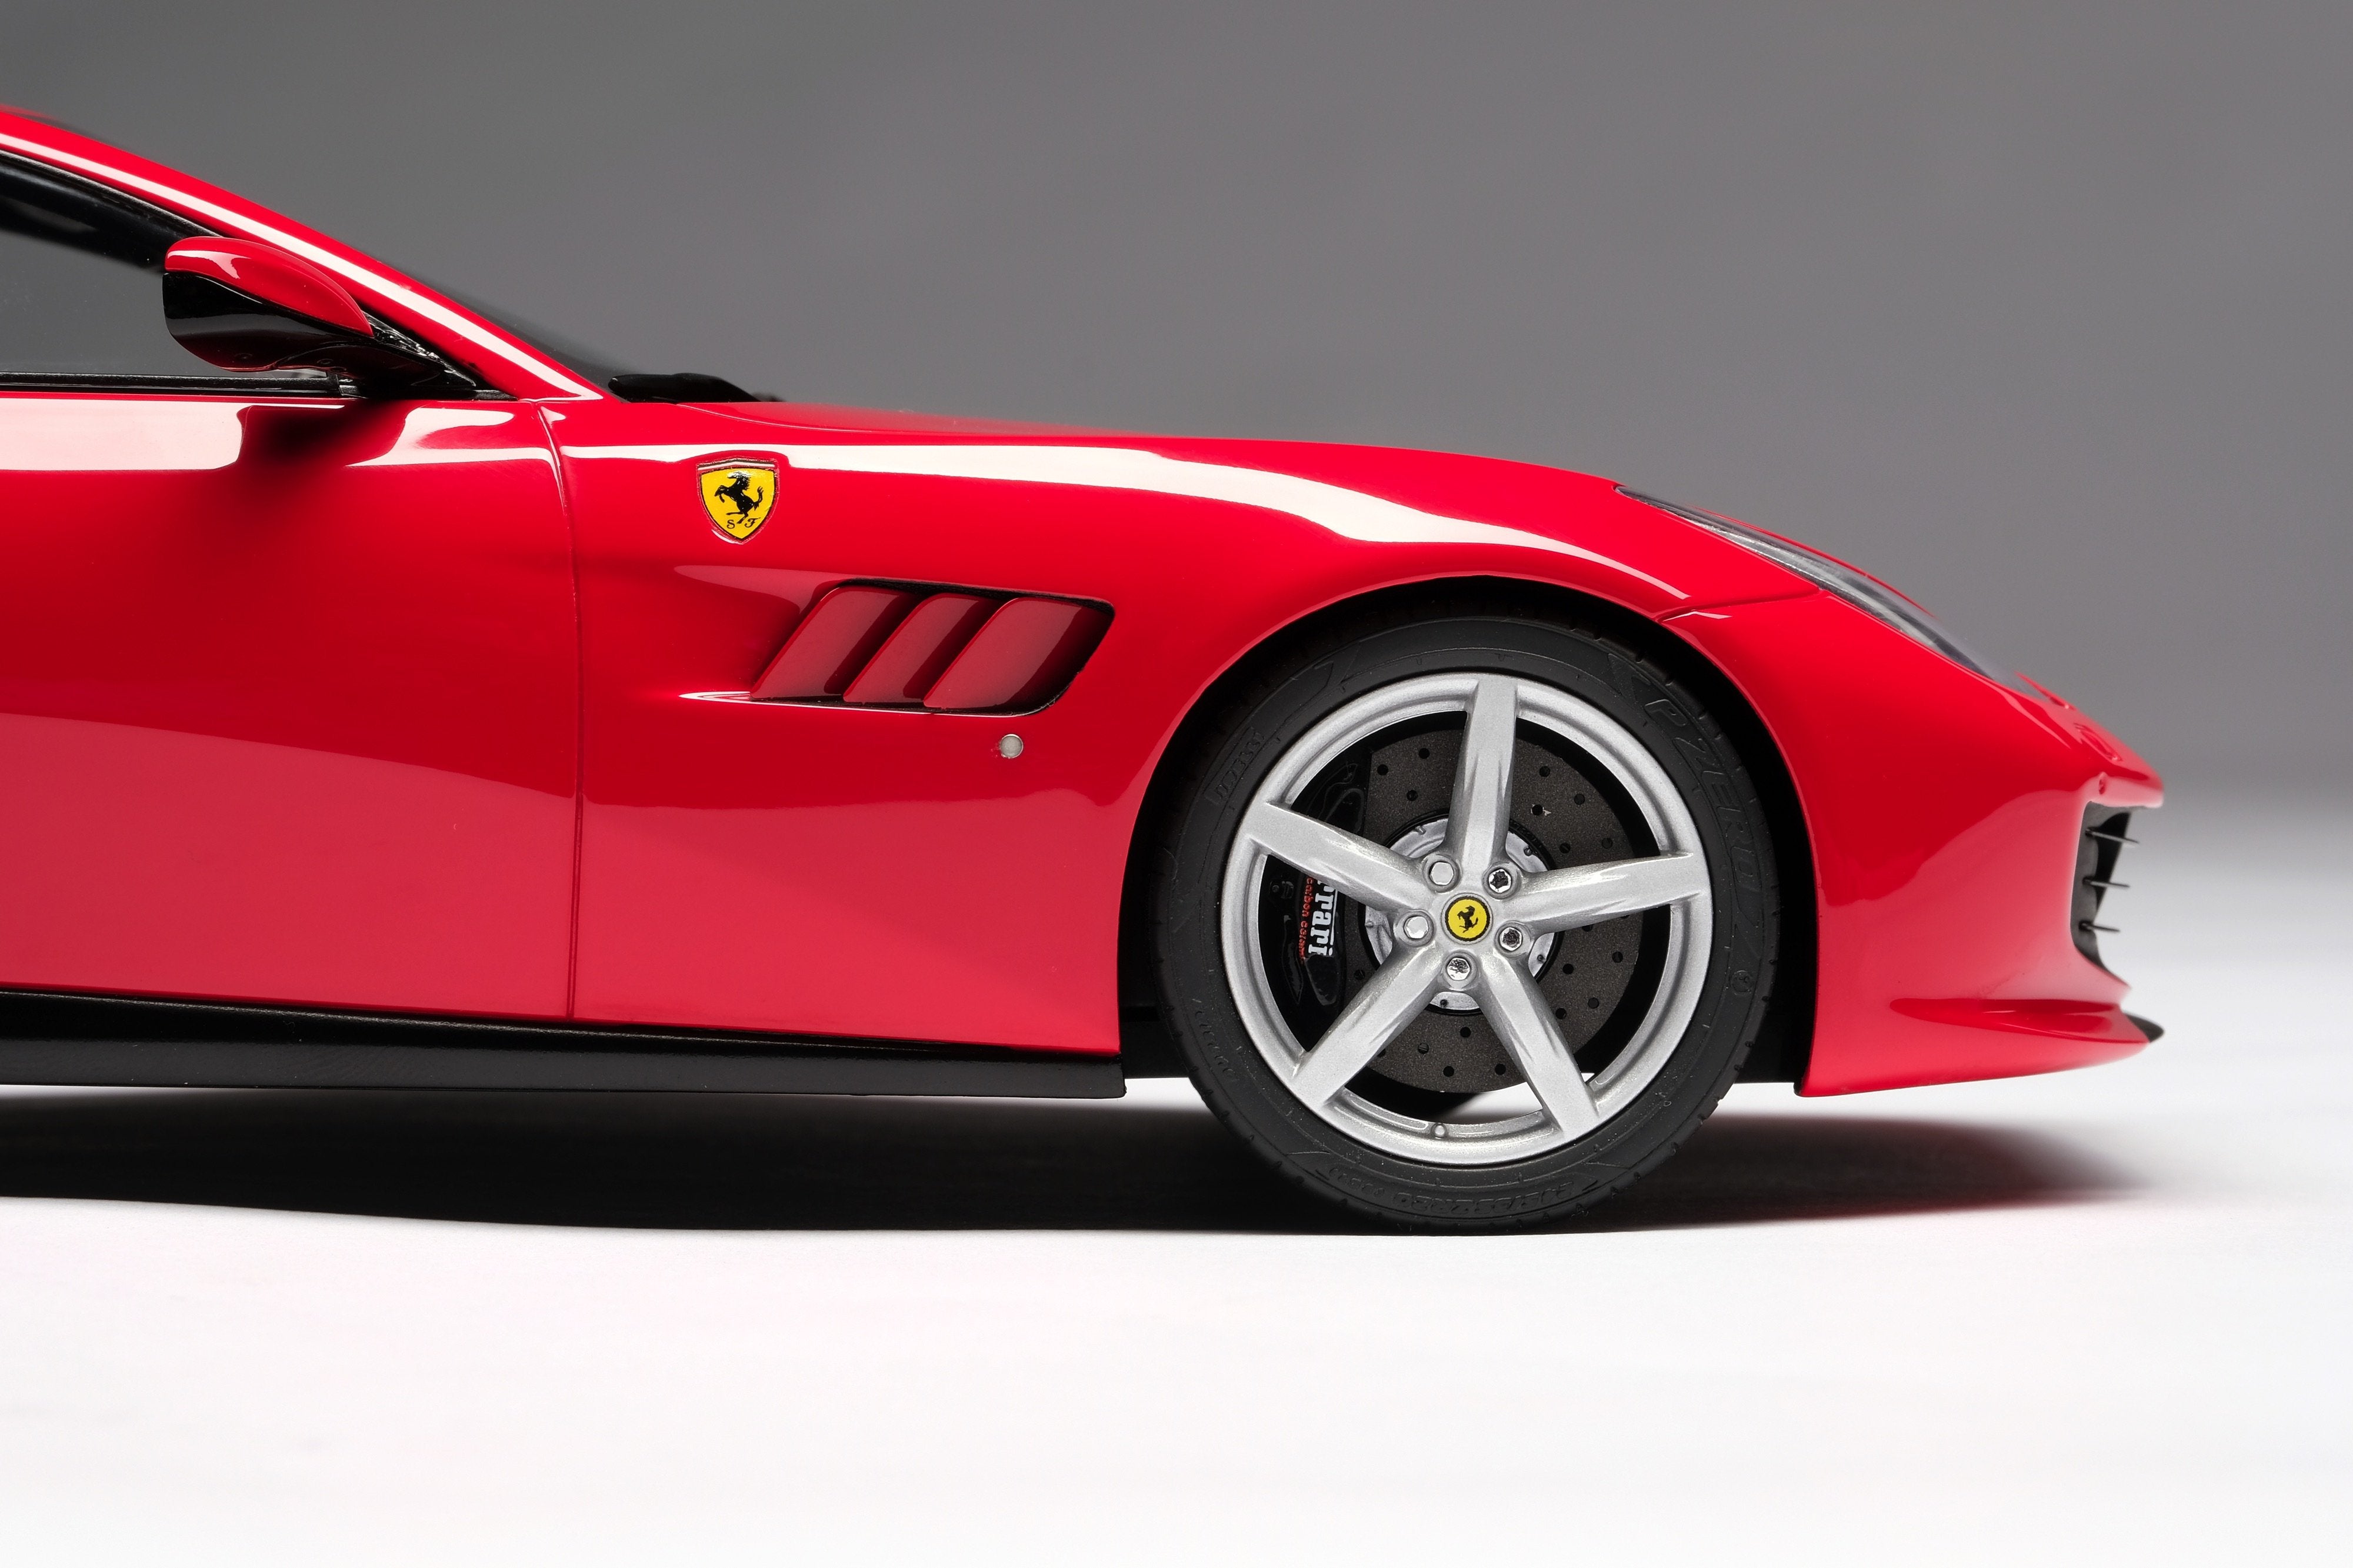 Ferrari Ferrari GTC4Lusso 1:18 scale model Man